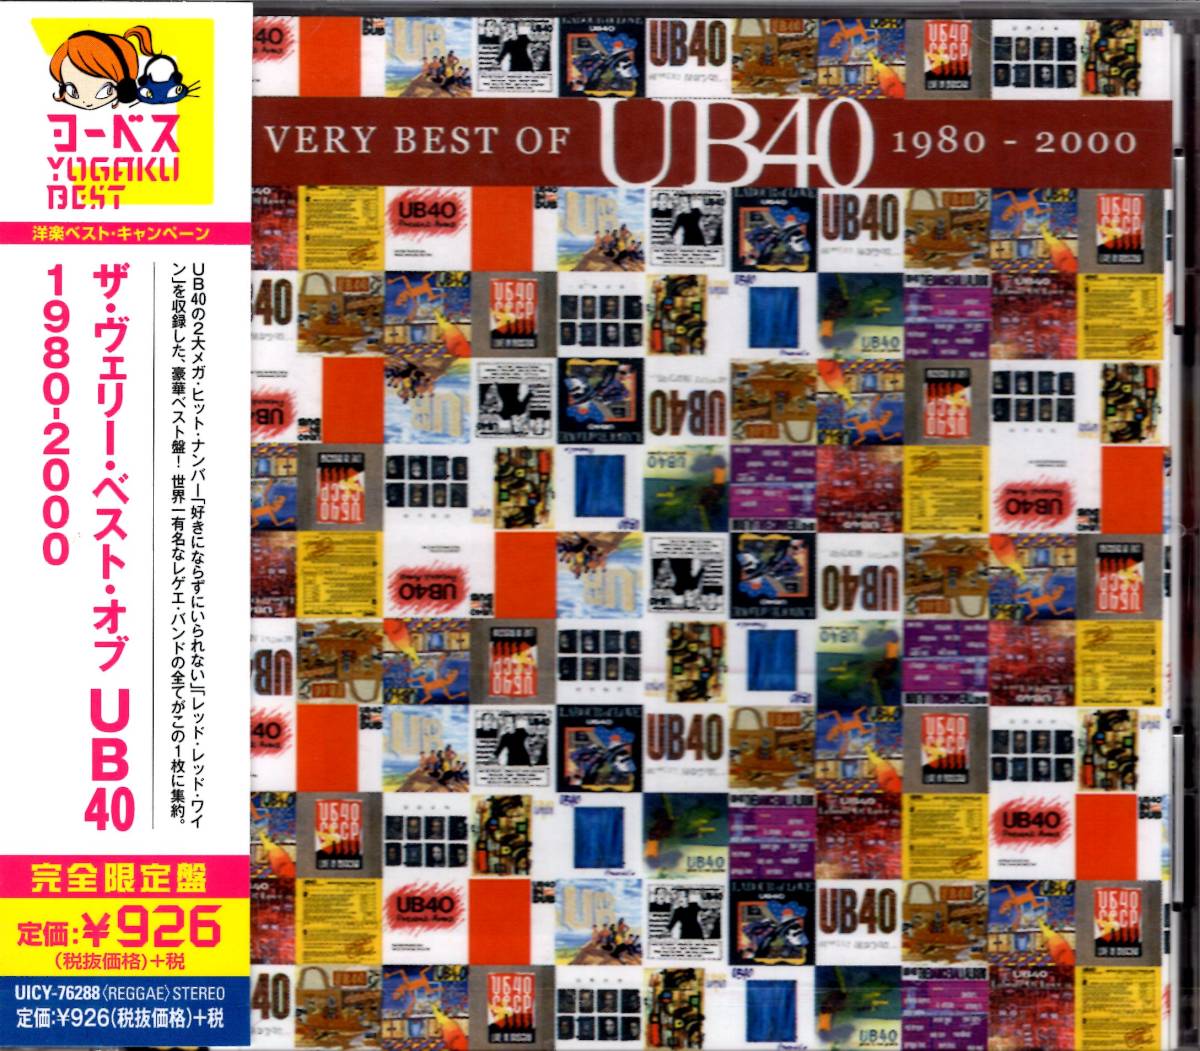 UB40 /ザ・ヴェリー・ベスト・オブ・UB40 1980-2000 お宝発見！入手困難CDにて価格高騰中！伝説のレゲエが甦る！未開封品！送料無料！_画像1